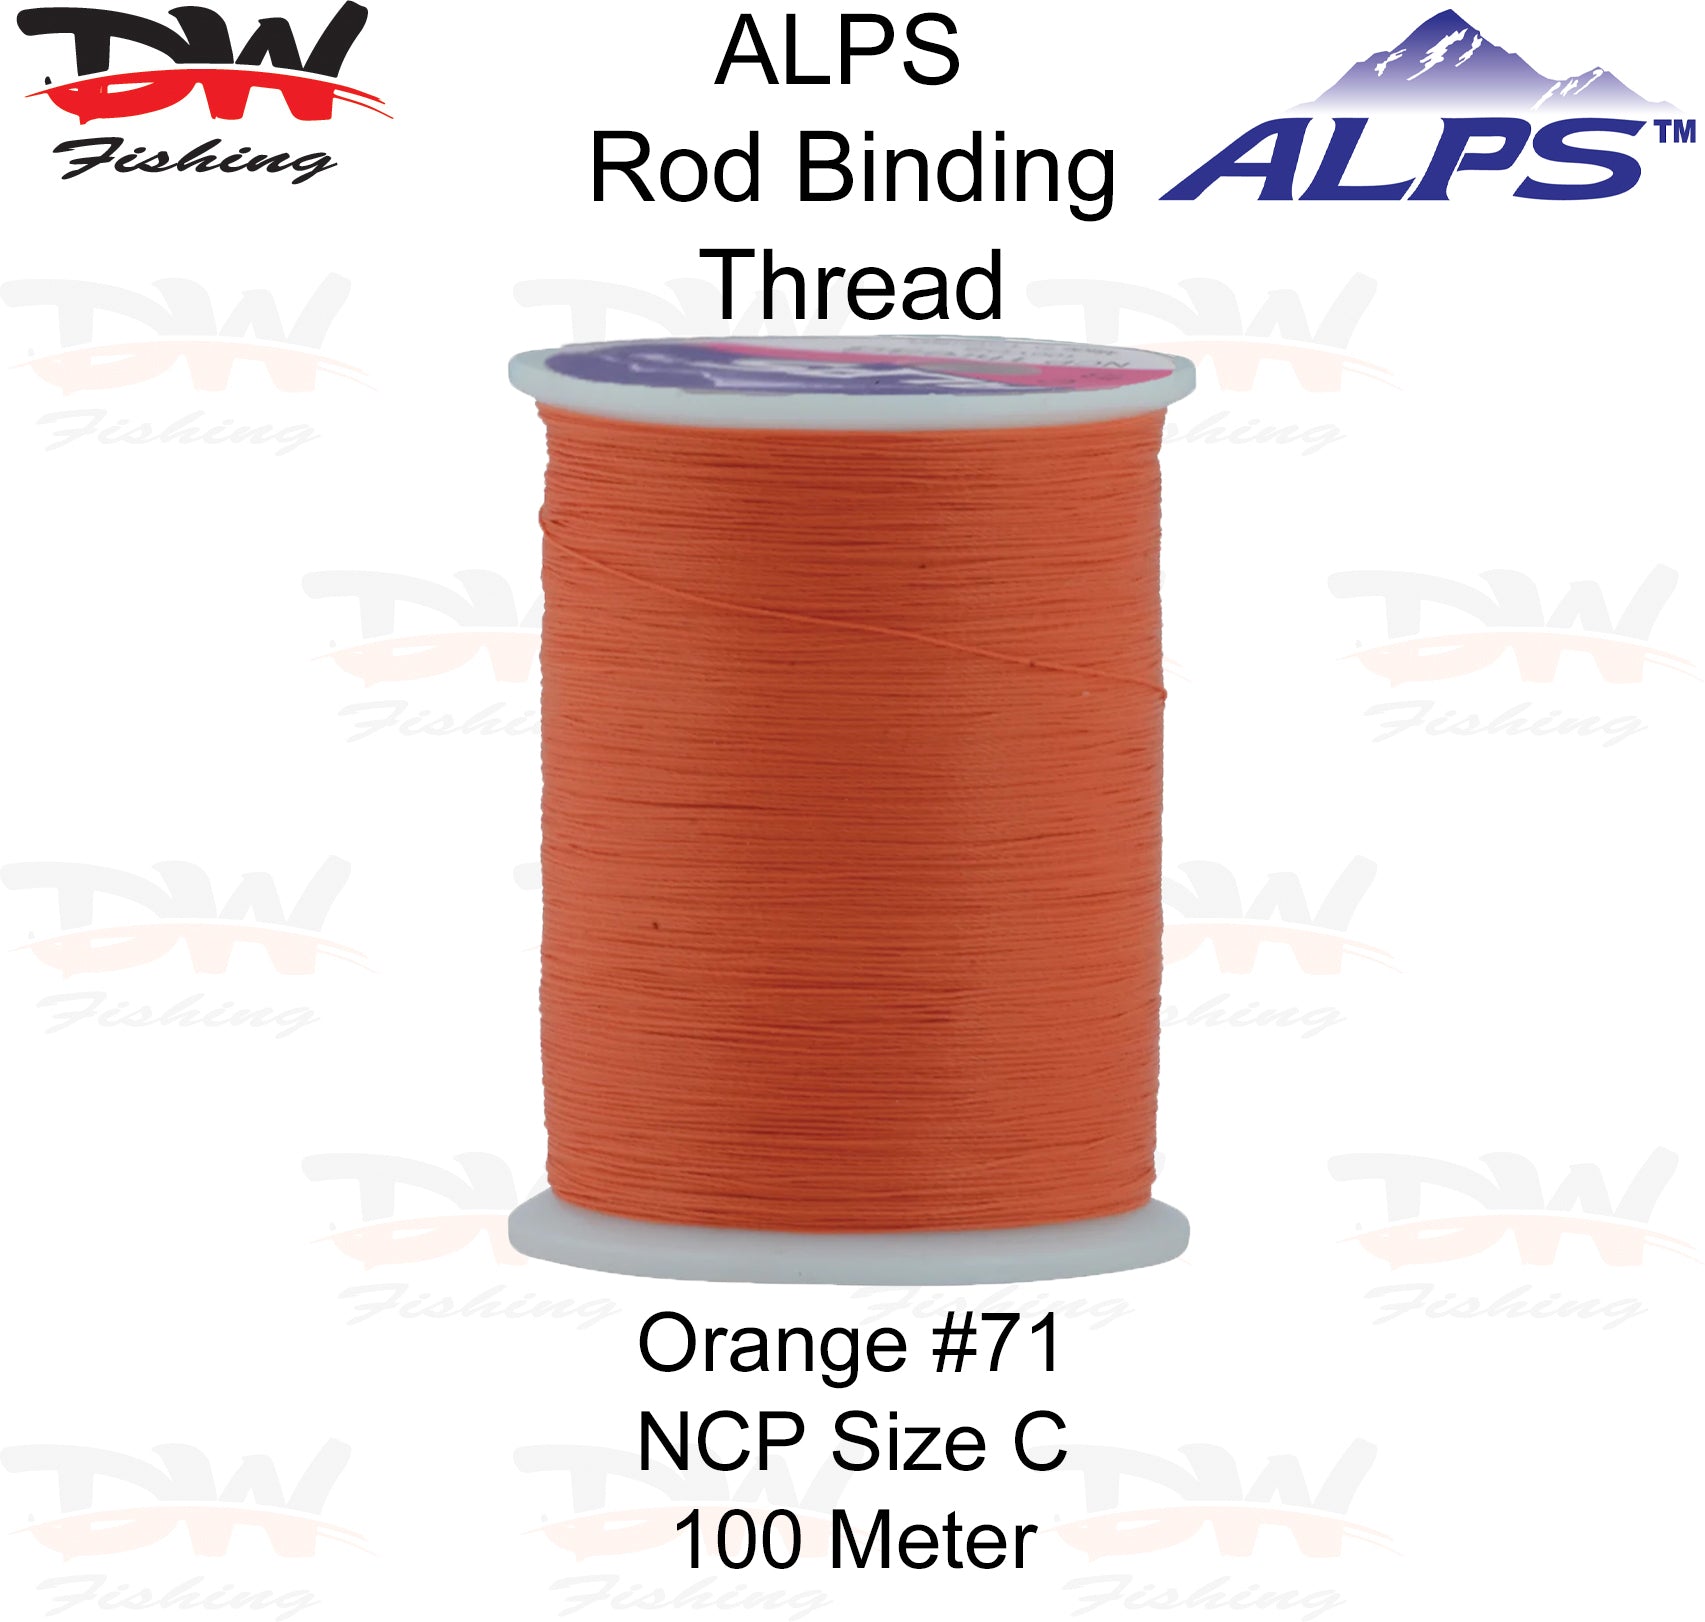 ALPS Rod Binding Thread | NCP Nylon Thread Size C 100mtrs